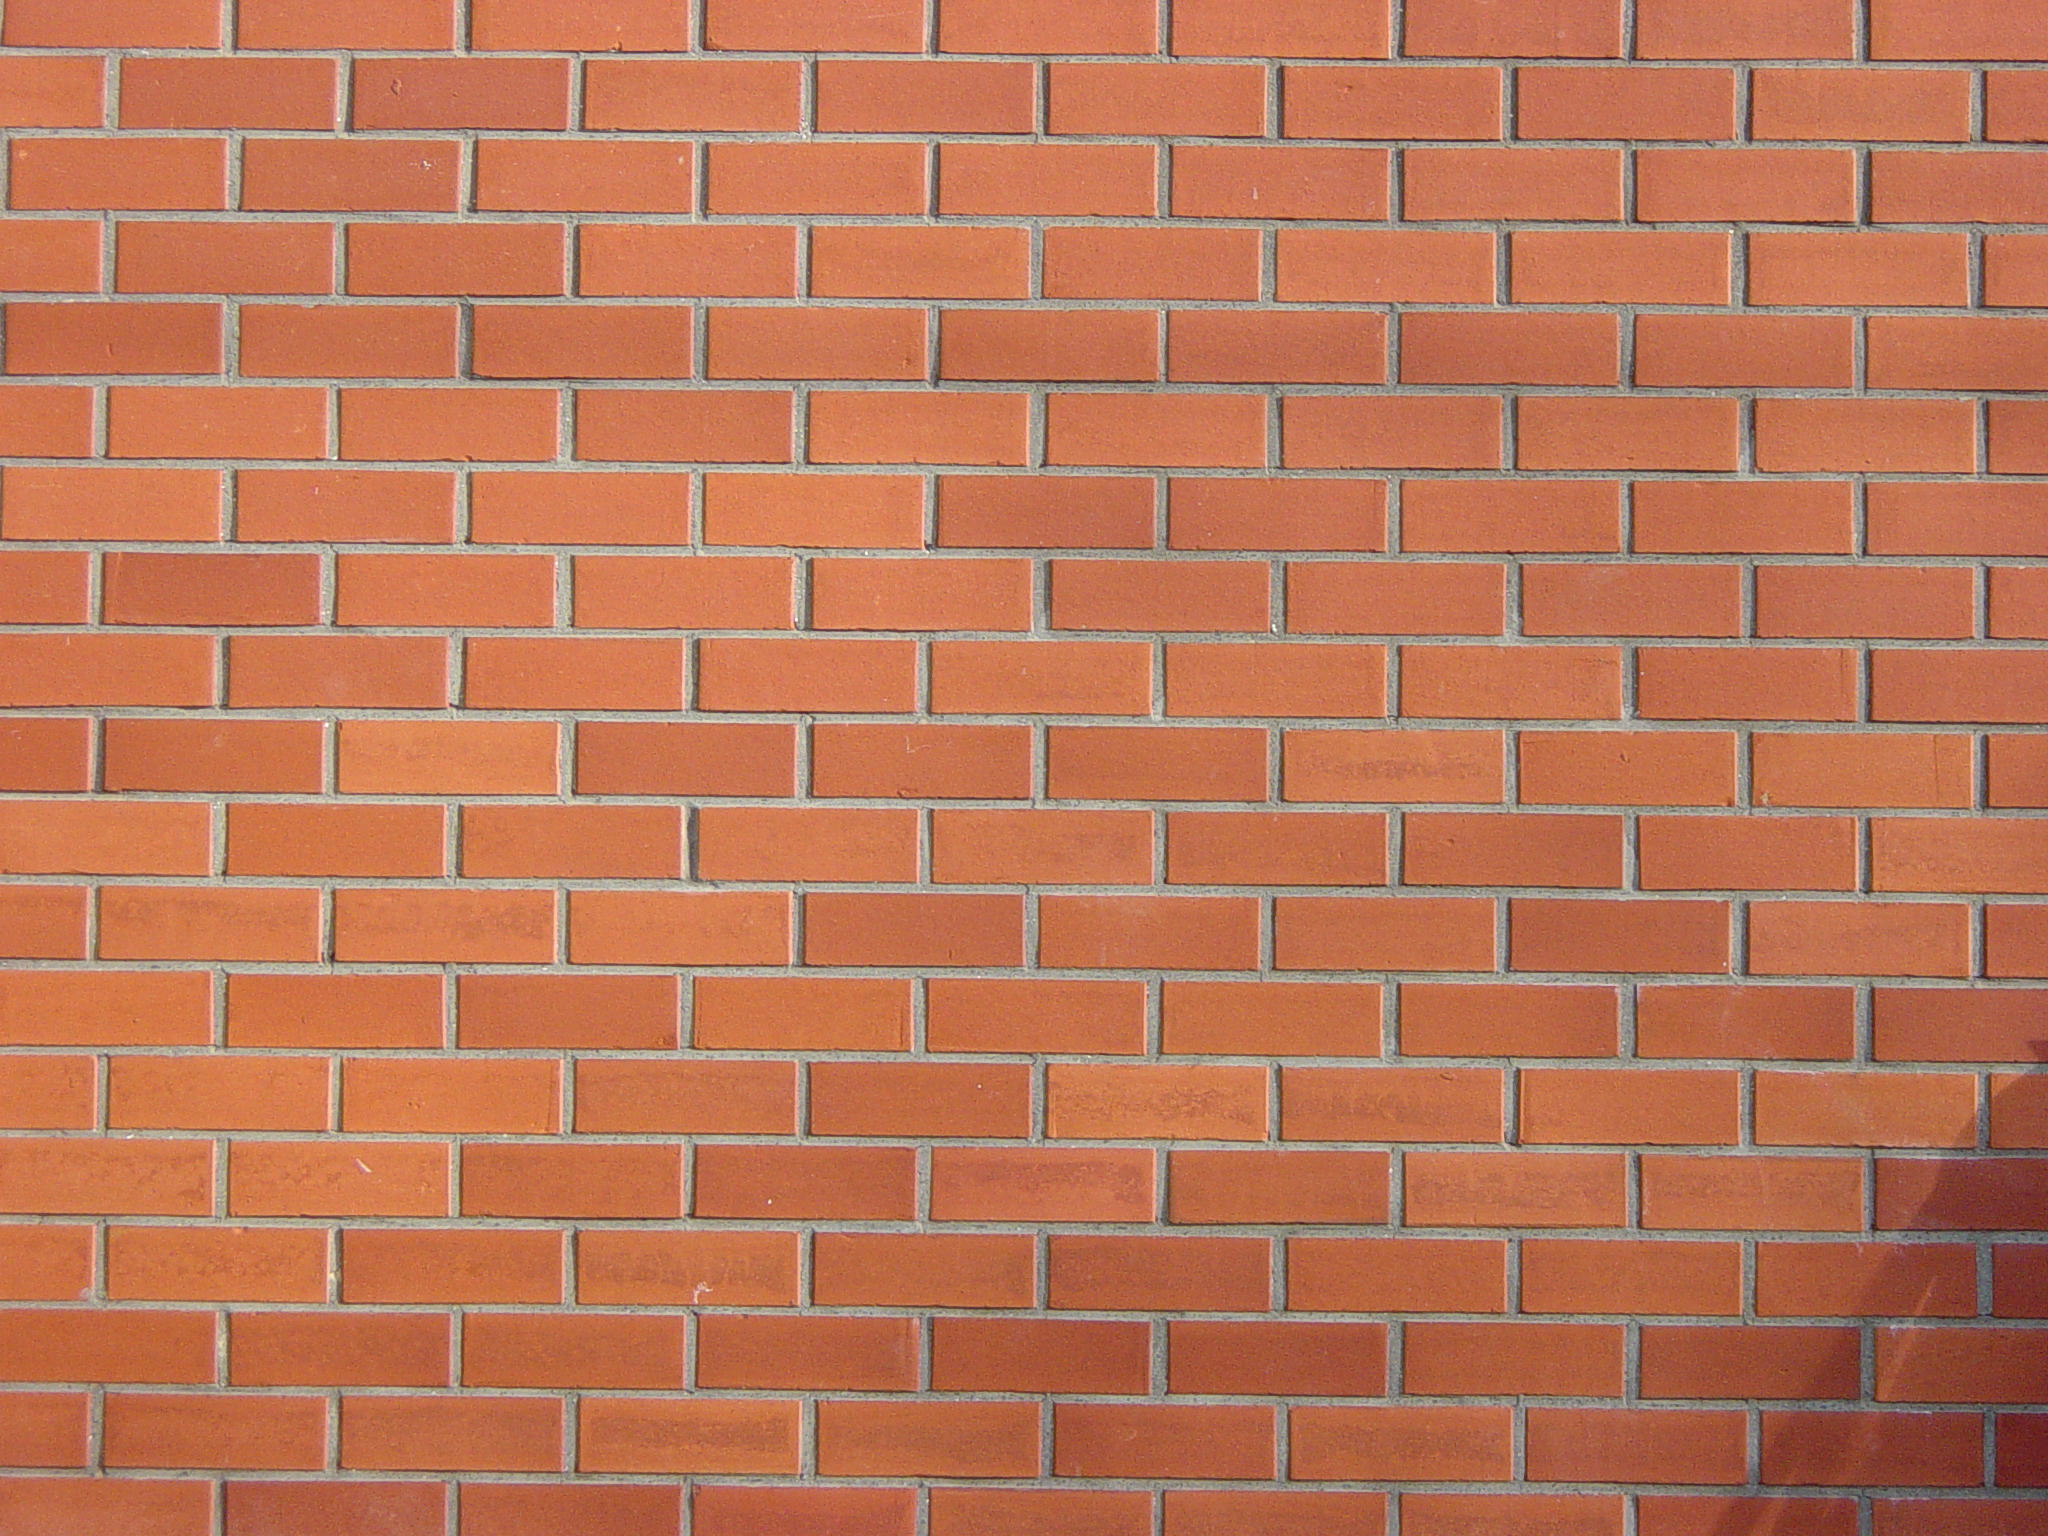 Brick wall by ashzstock on DeviantArt